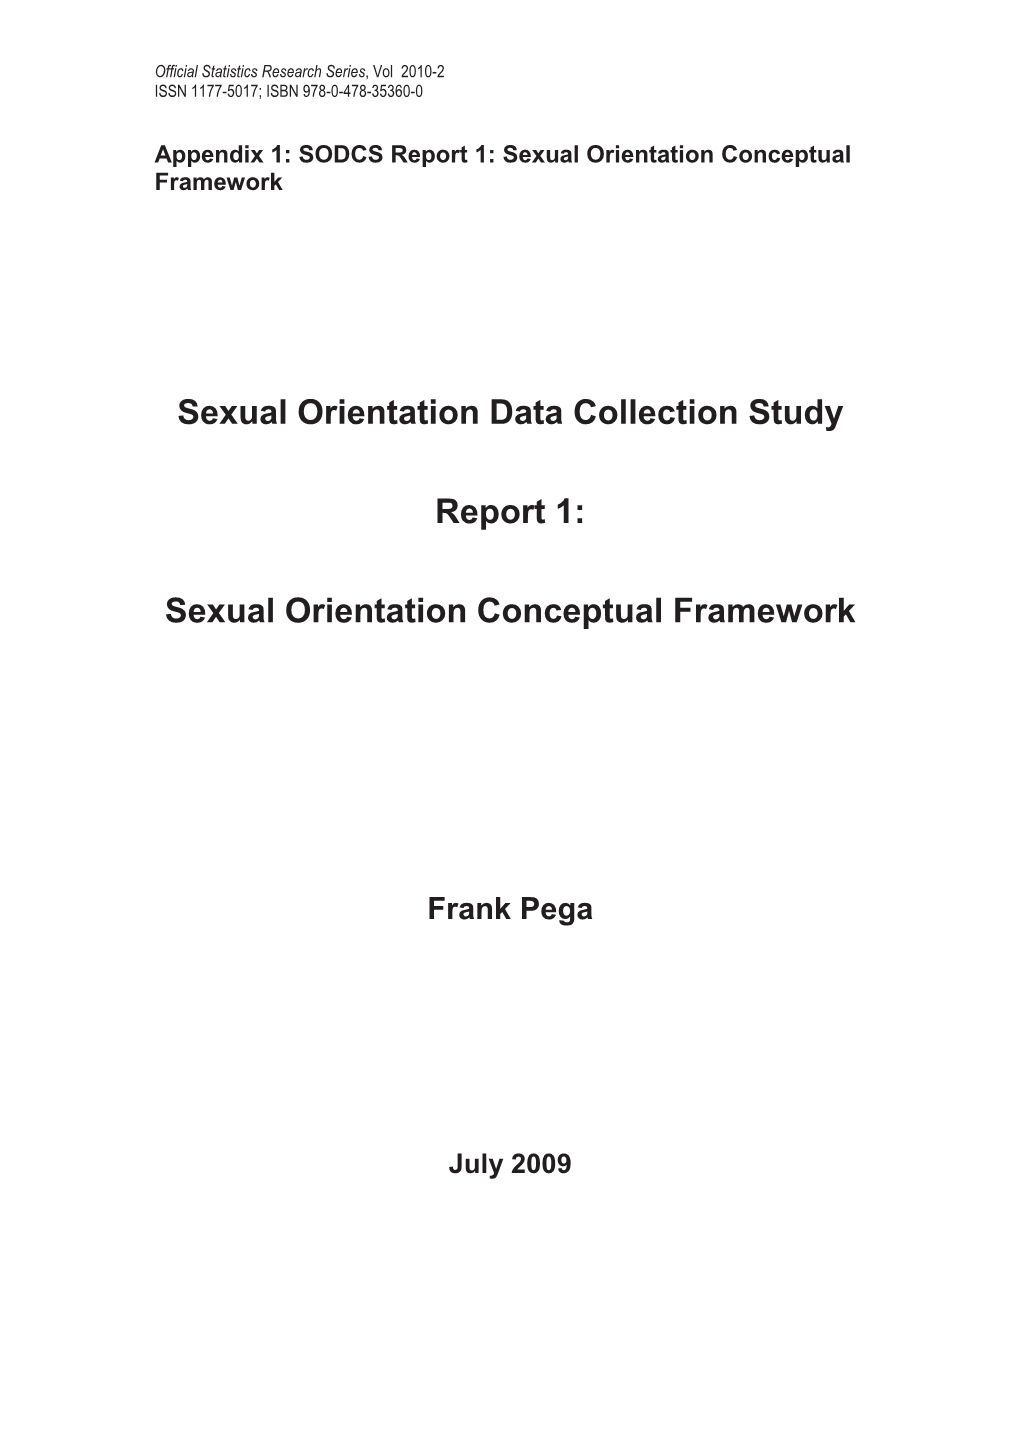 Sexual Orientation Conceptual Framework